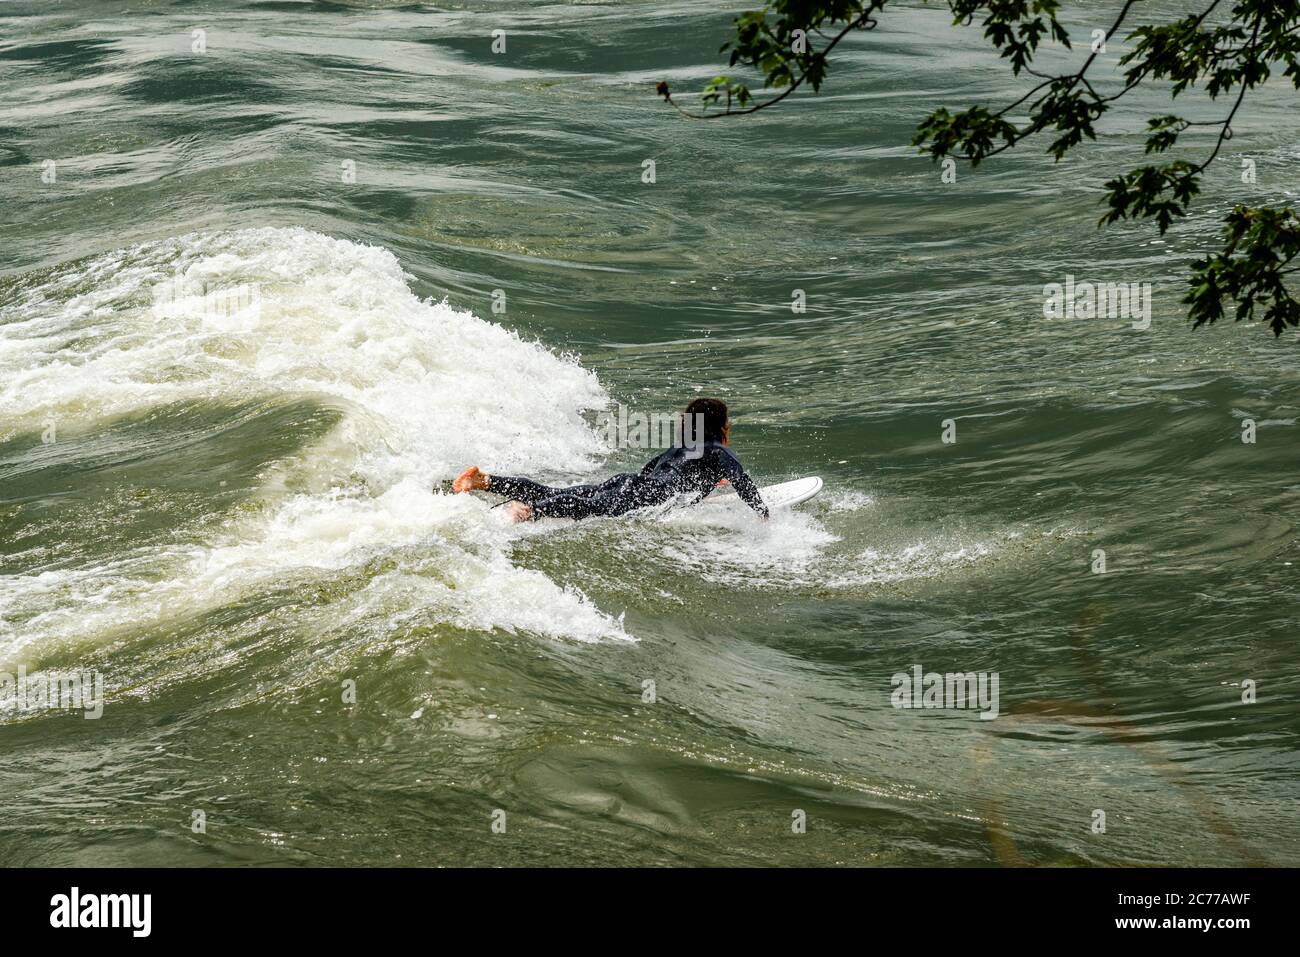 Surfen im St. Lawrence River in Montréal - Québec, Kanada Stockfoto